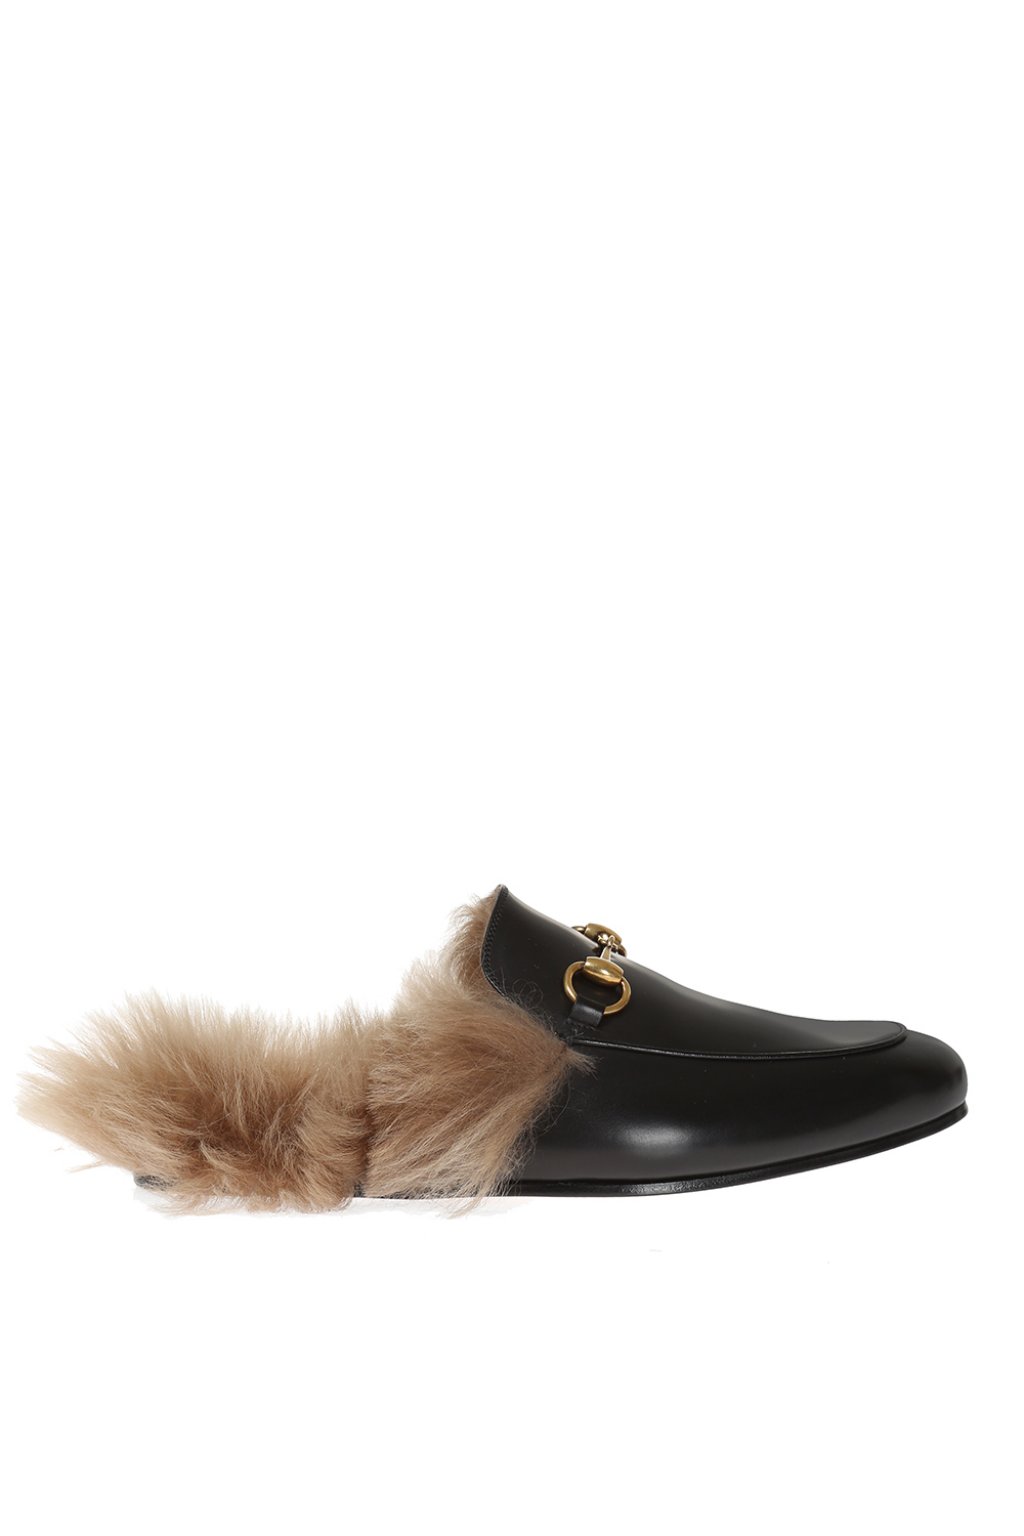 Princetown' leather slippers Gucci - Vitkac Australia